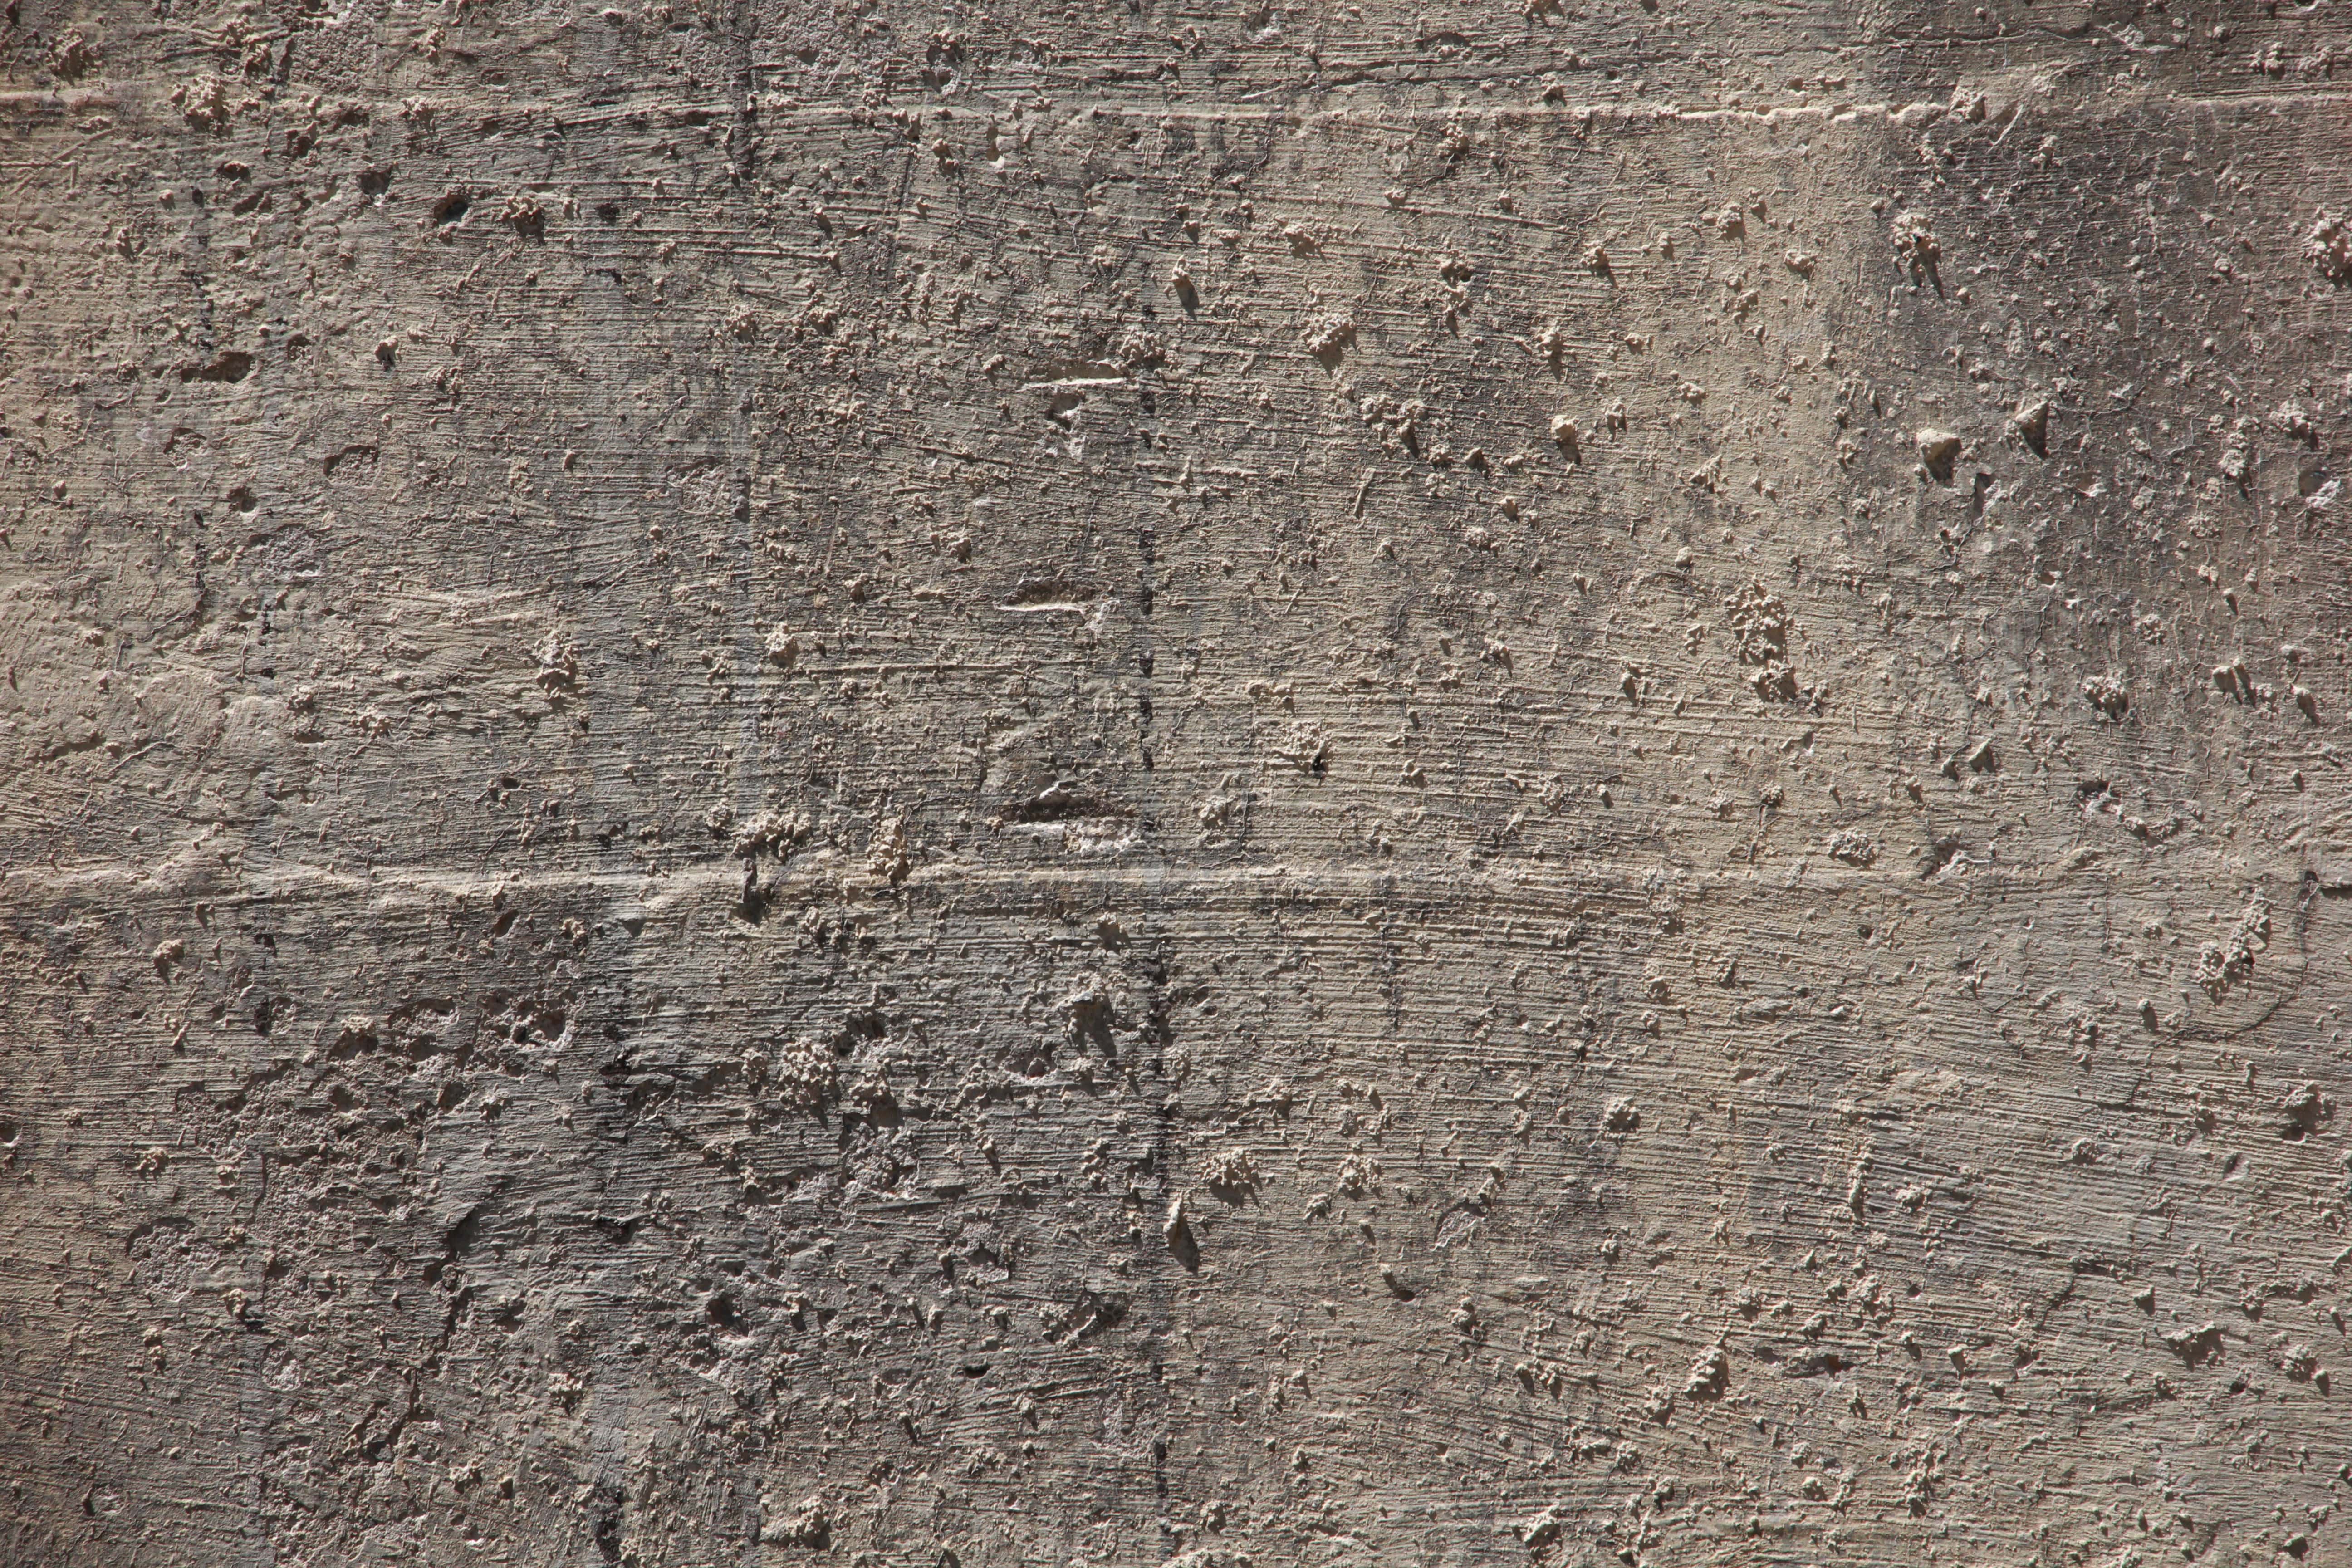 Stone concrete blocks with lines through - Texture X